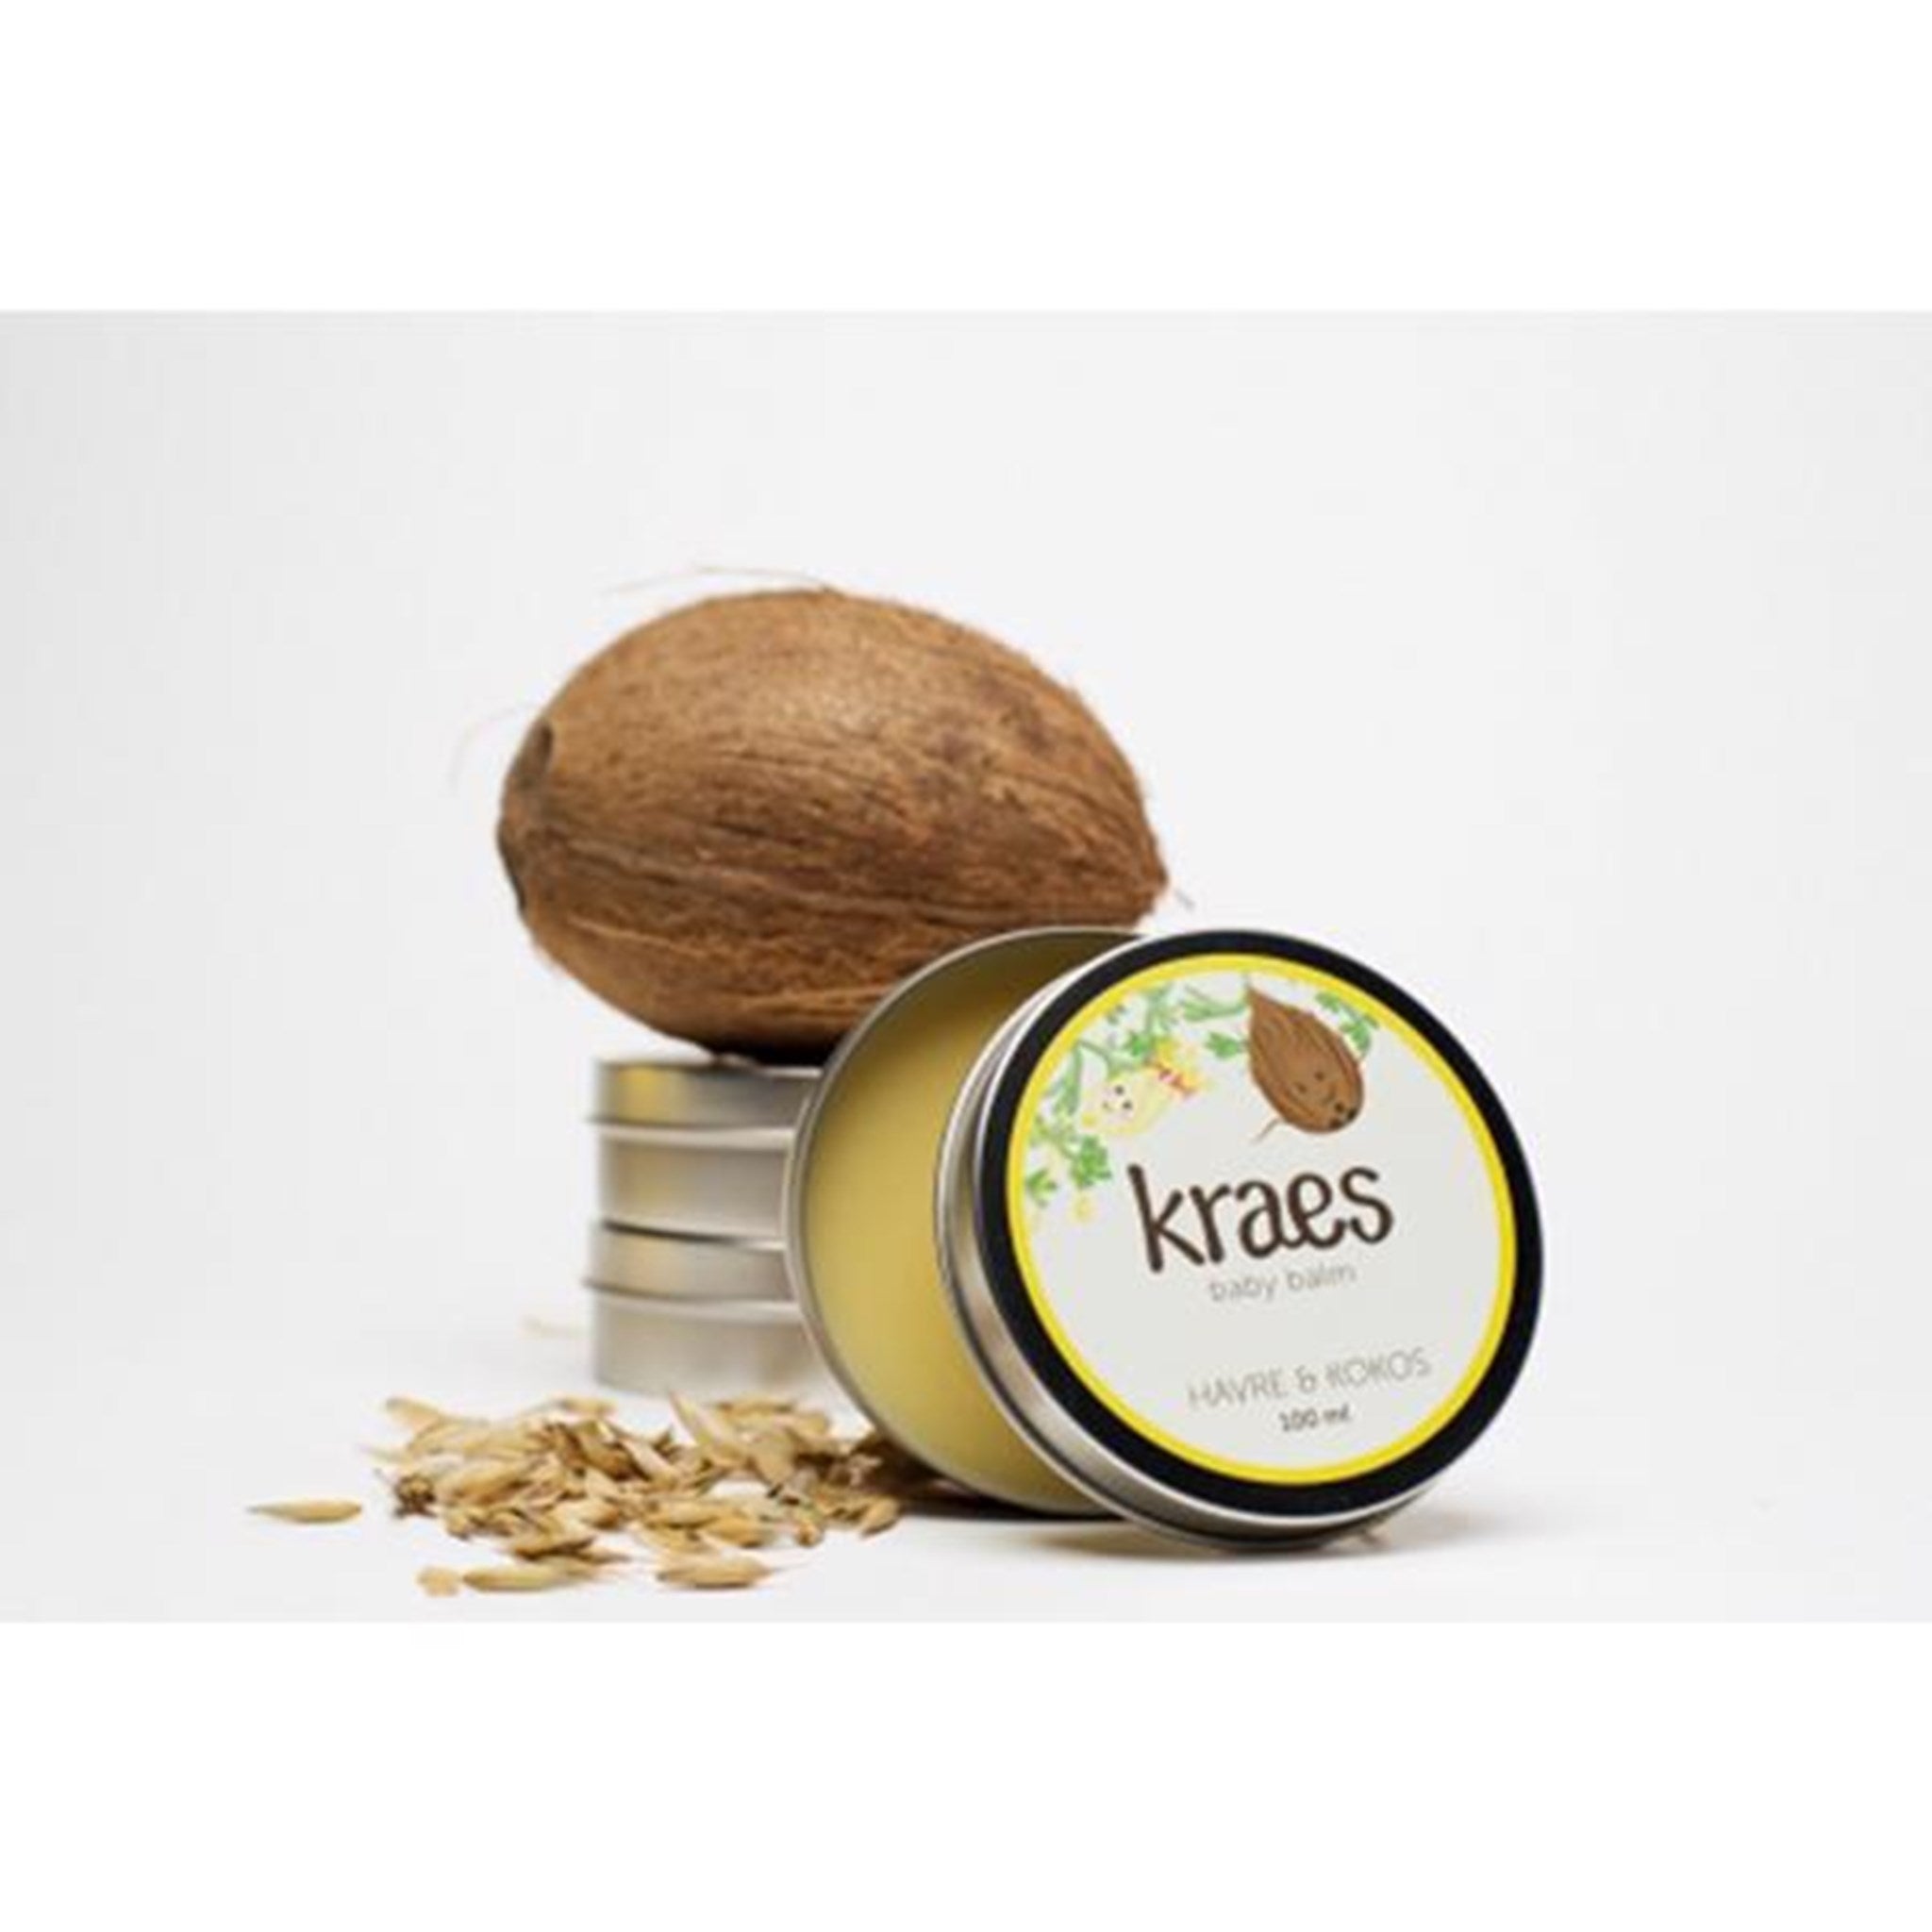 Kraes Baby Balm Havre/Kokos 100 ml 2